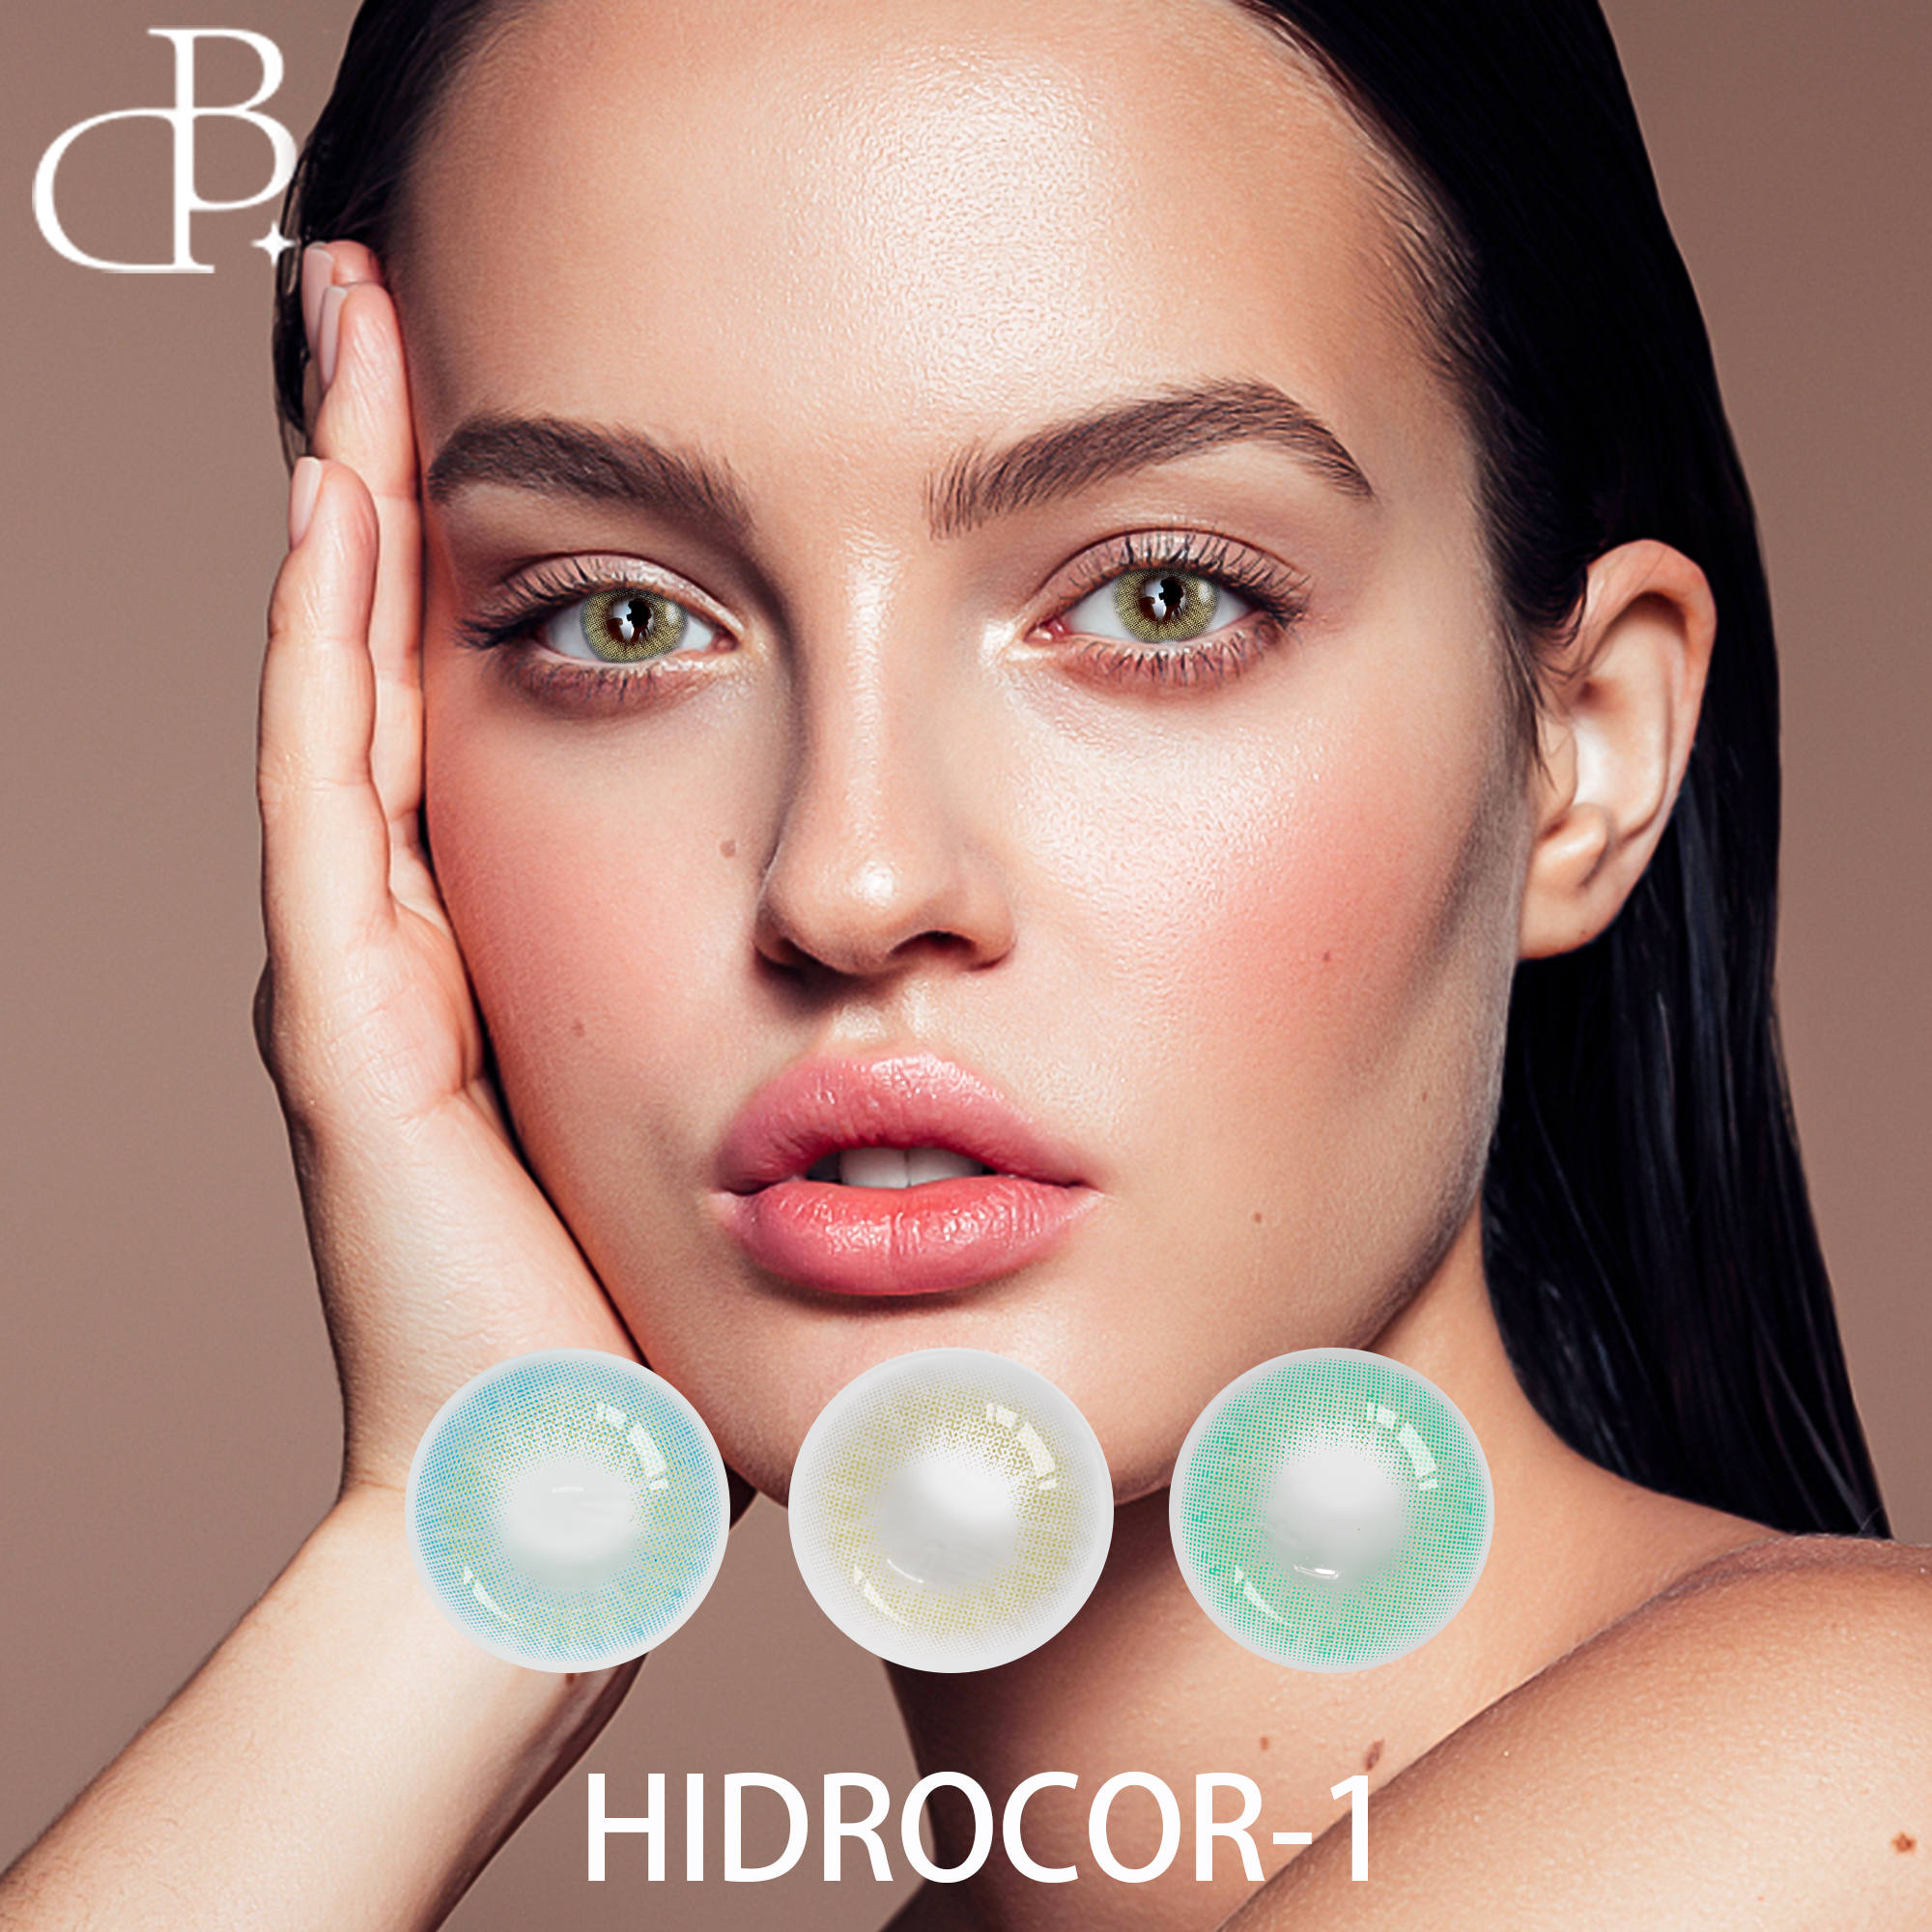 Lentile de contact colorate HIDROCOR lentes contacto Lentile colorate pentru ochi naturali de stil nou, lentile pentru ochi cosmetice pentru cosplay